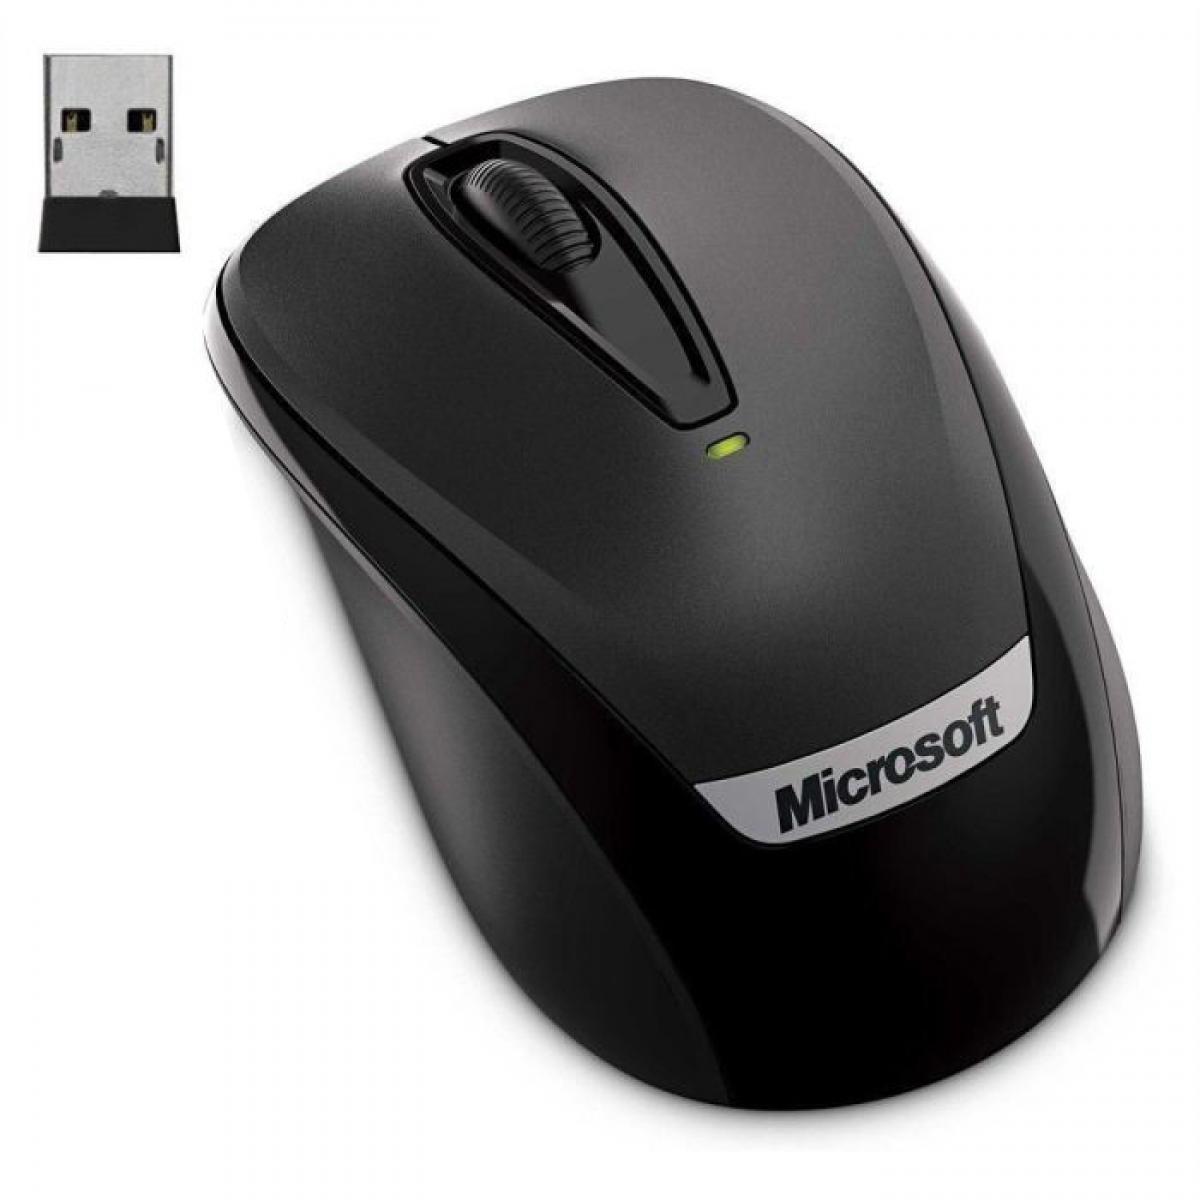 how to setup microsoft wireless mouse 3500